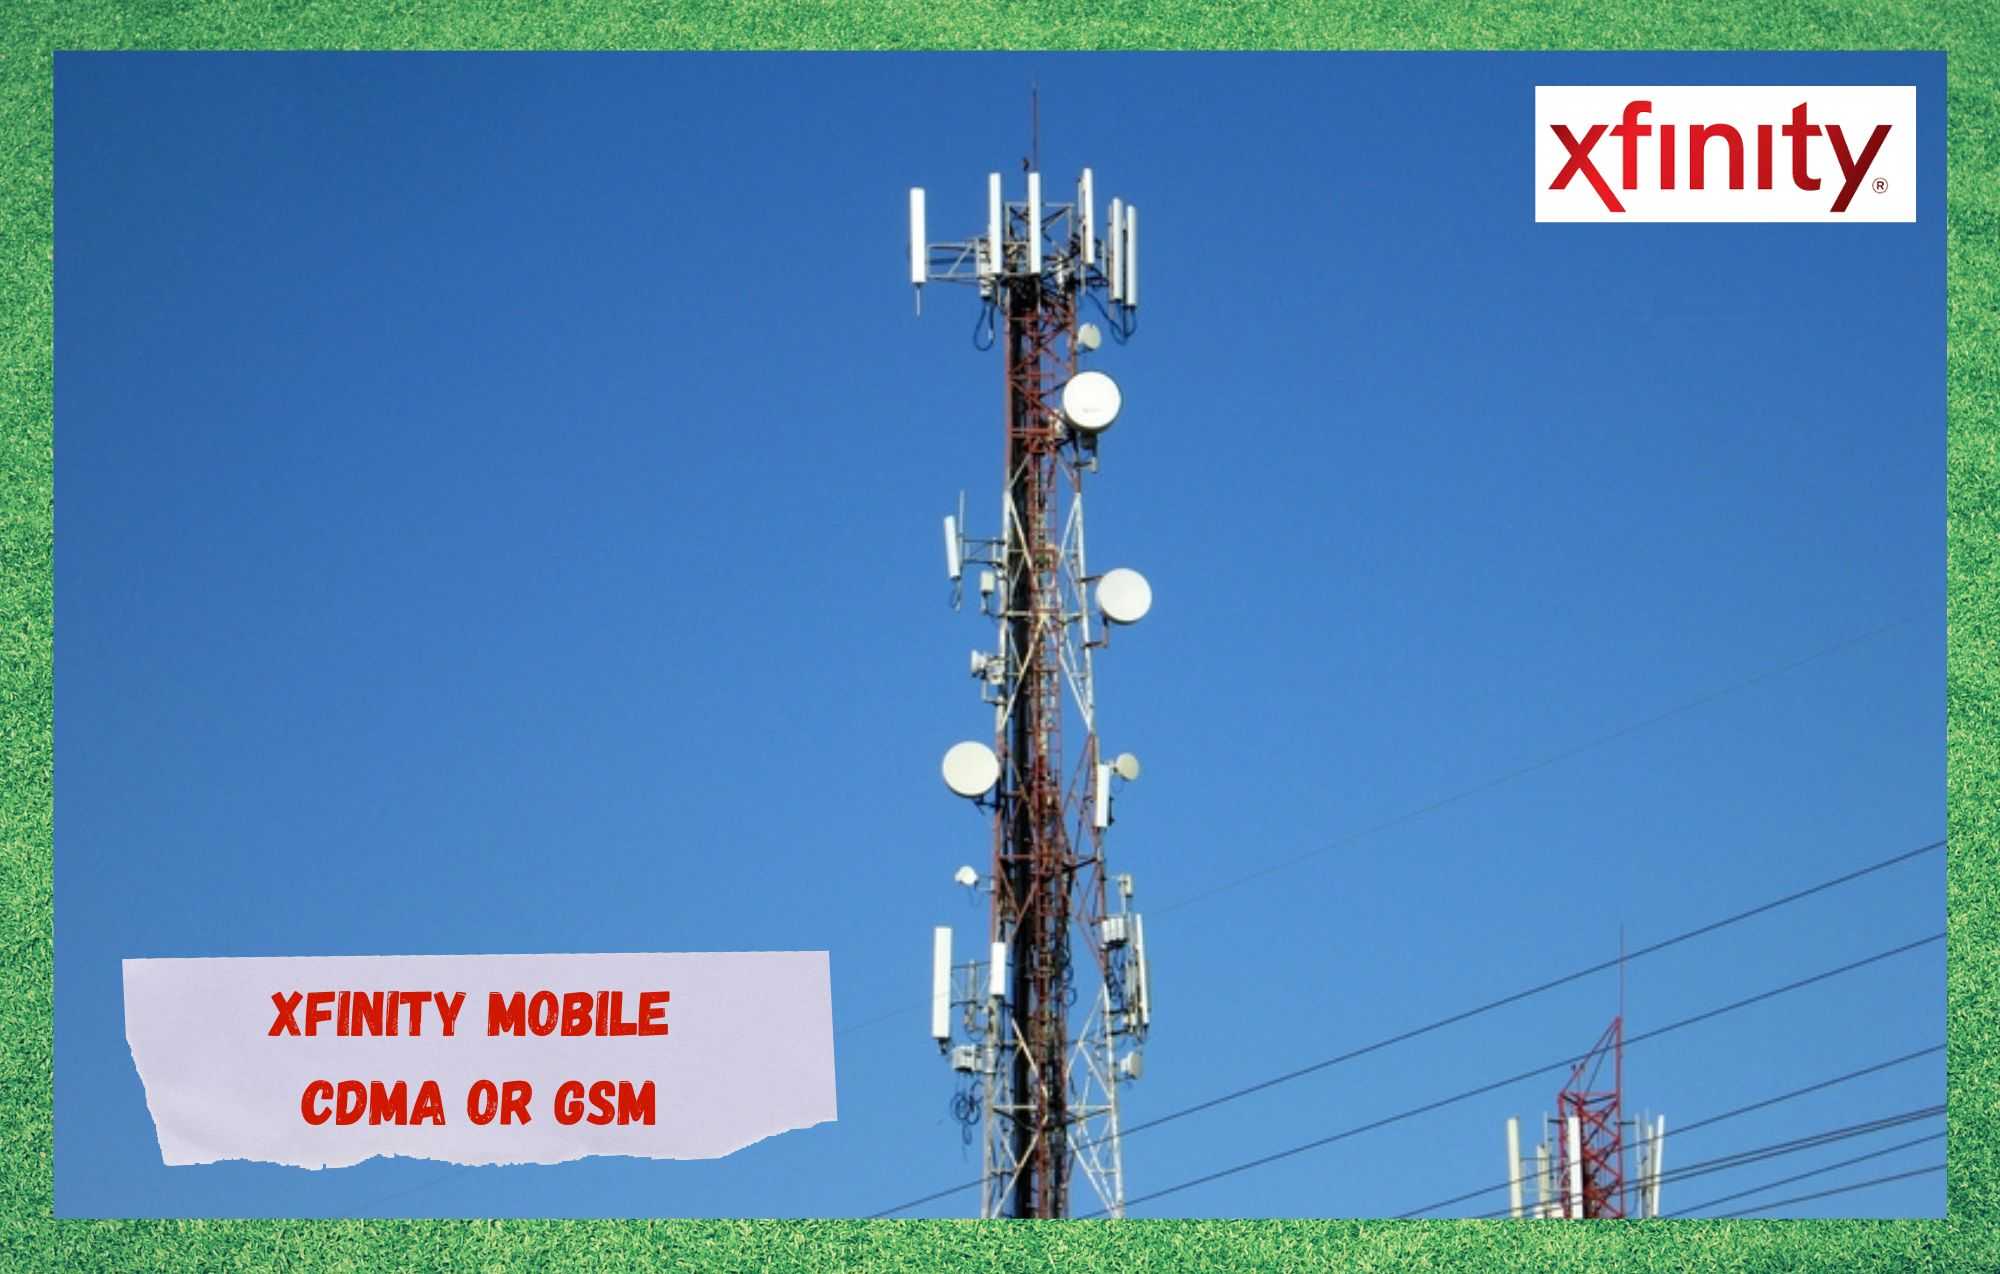 Xfinity Mobile CDMA aŭ GSM: Kiu?